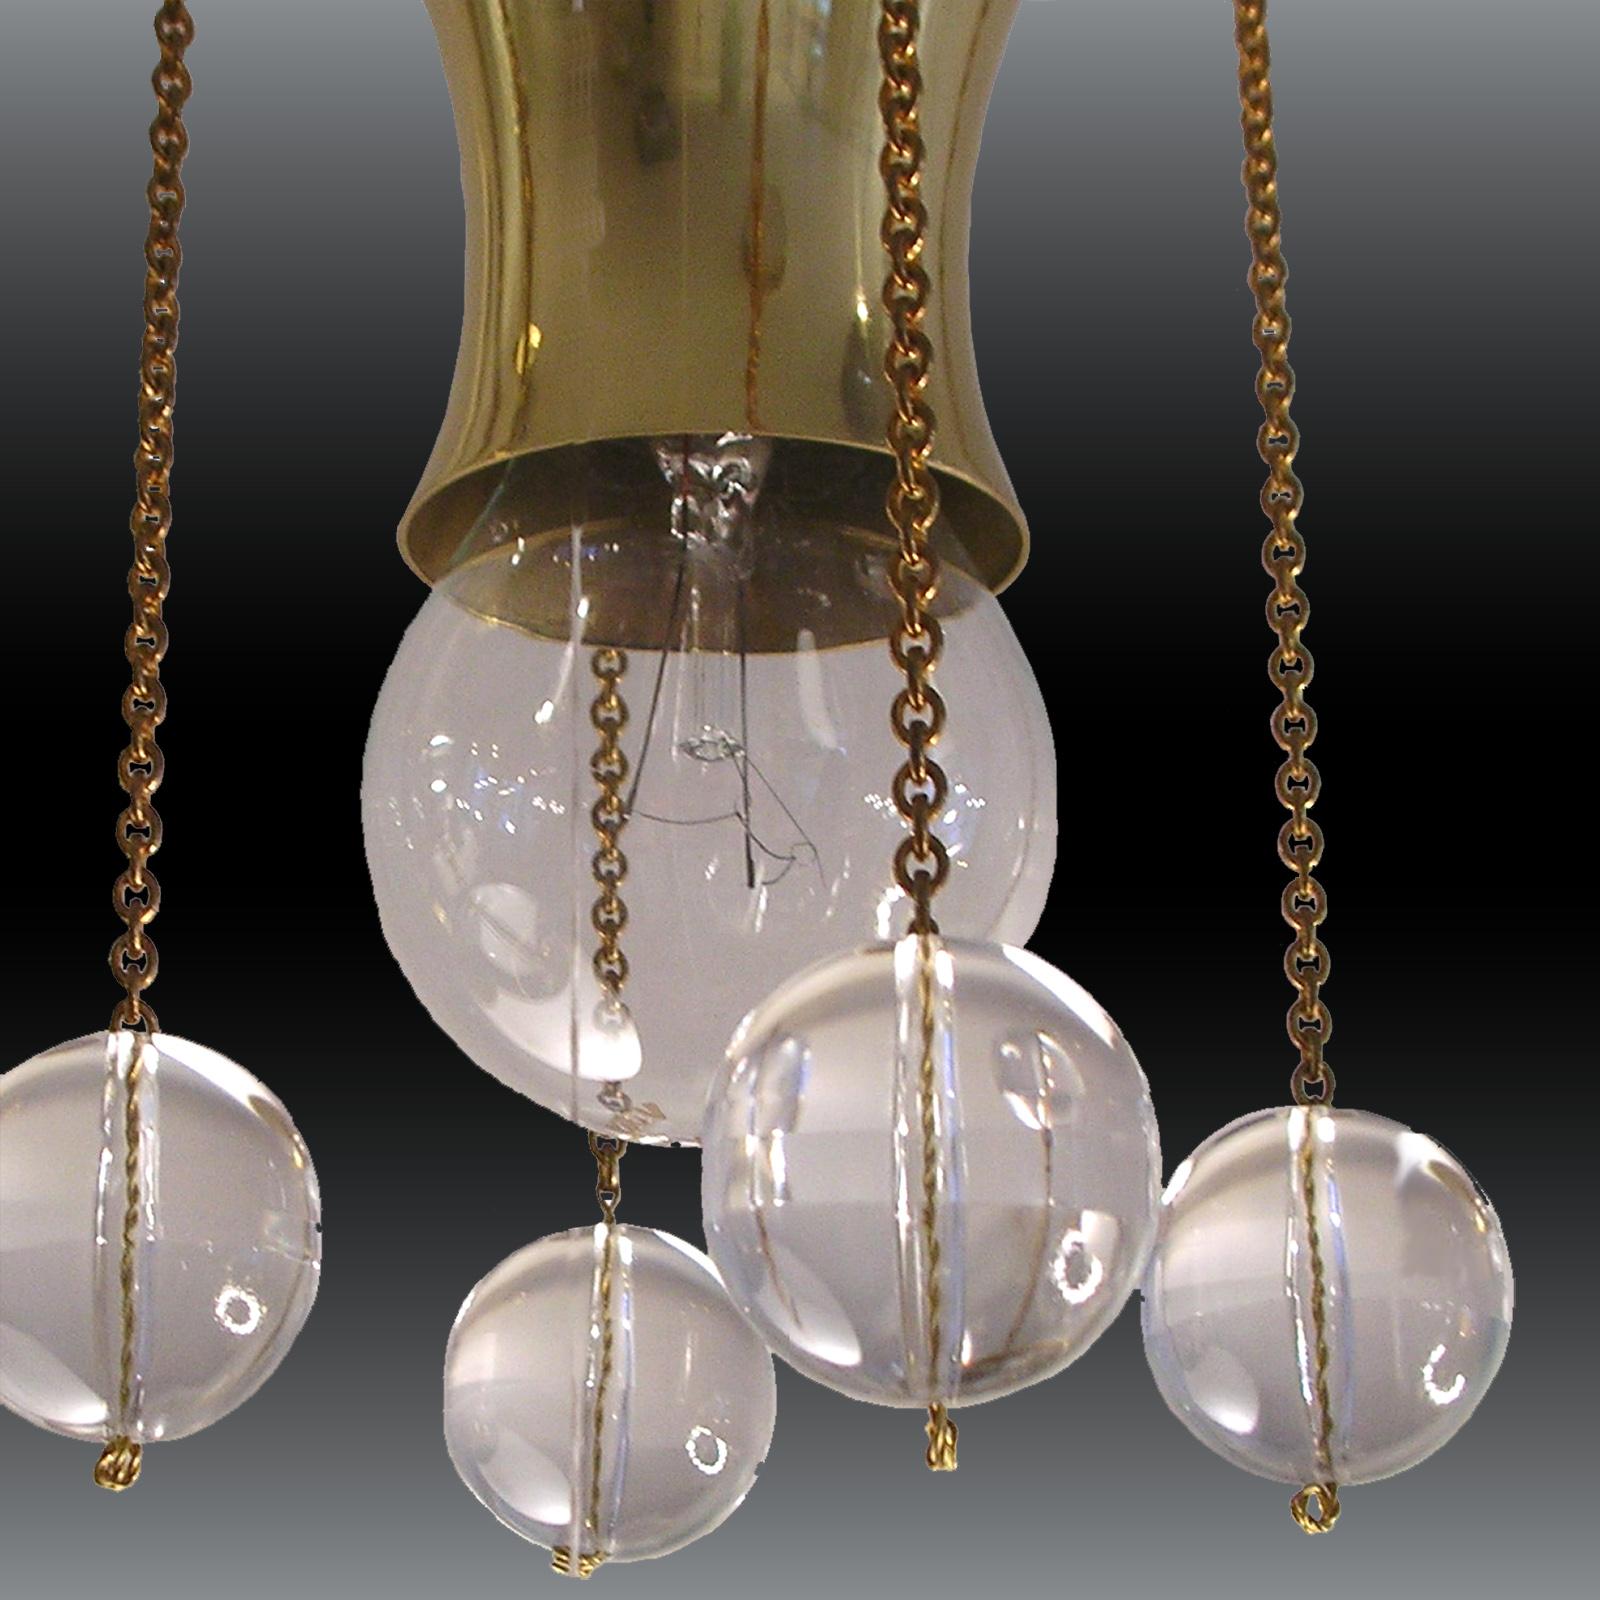 Hand-Crafted Josef Hoffmann Wiener Werkstaette Jugendstil Ceiling Lamp